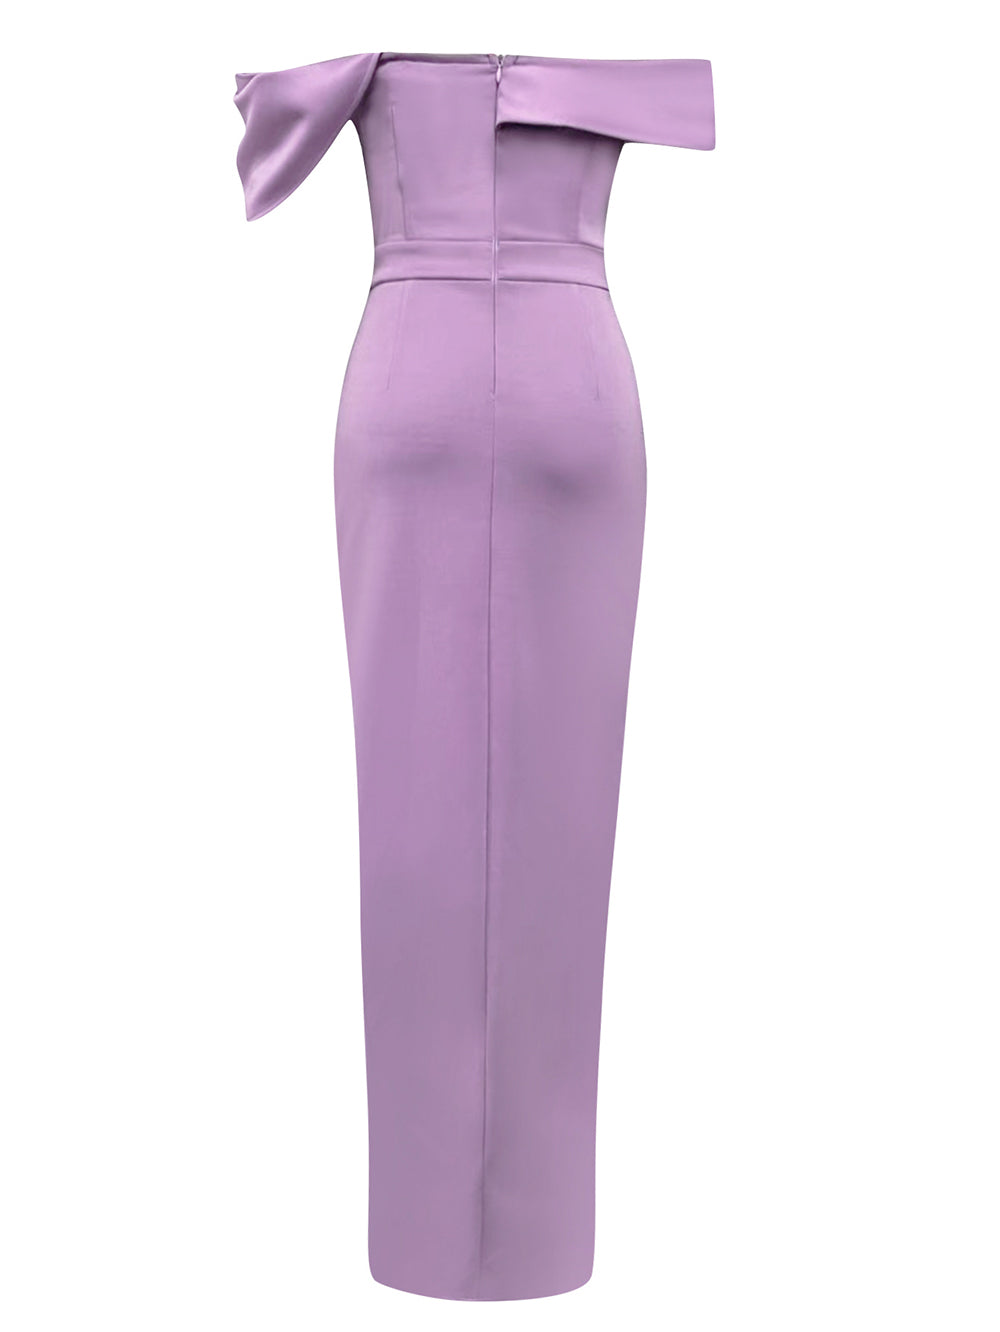 Purple Bodycon Dress HB100700